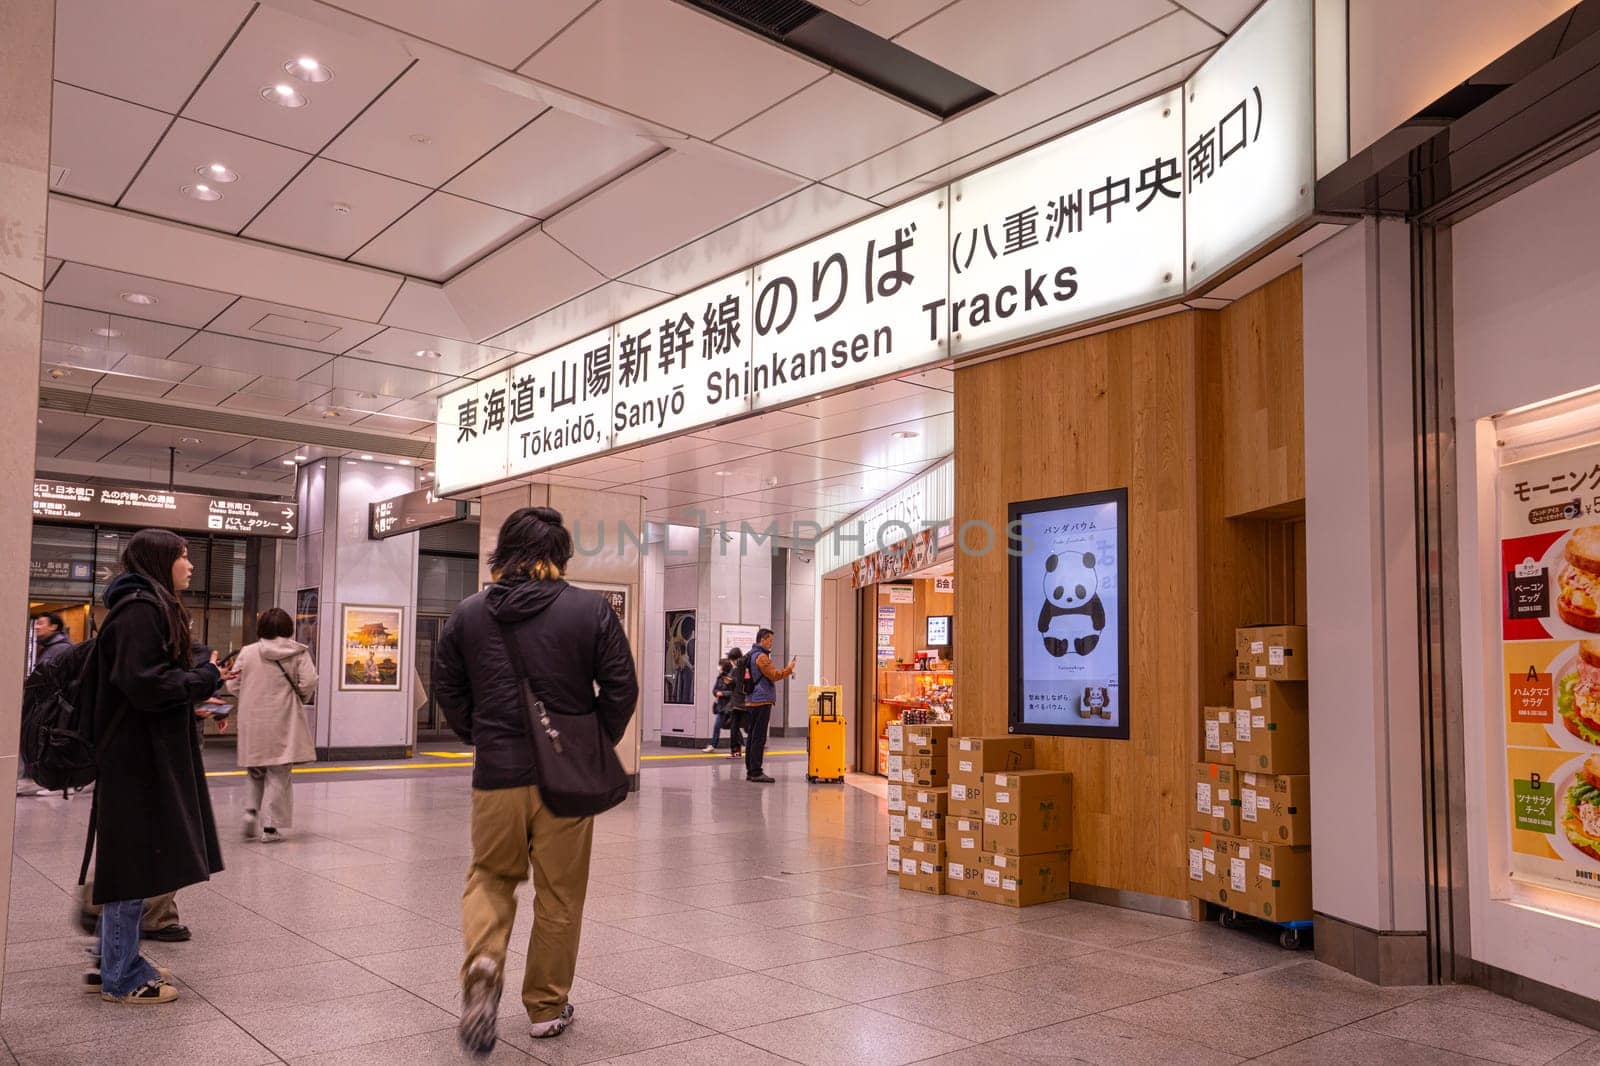 Japan Railways and Shinkansen ticket sales office in Tokyo, Japan by sergiodv